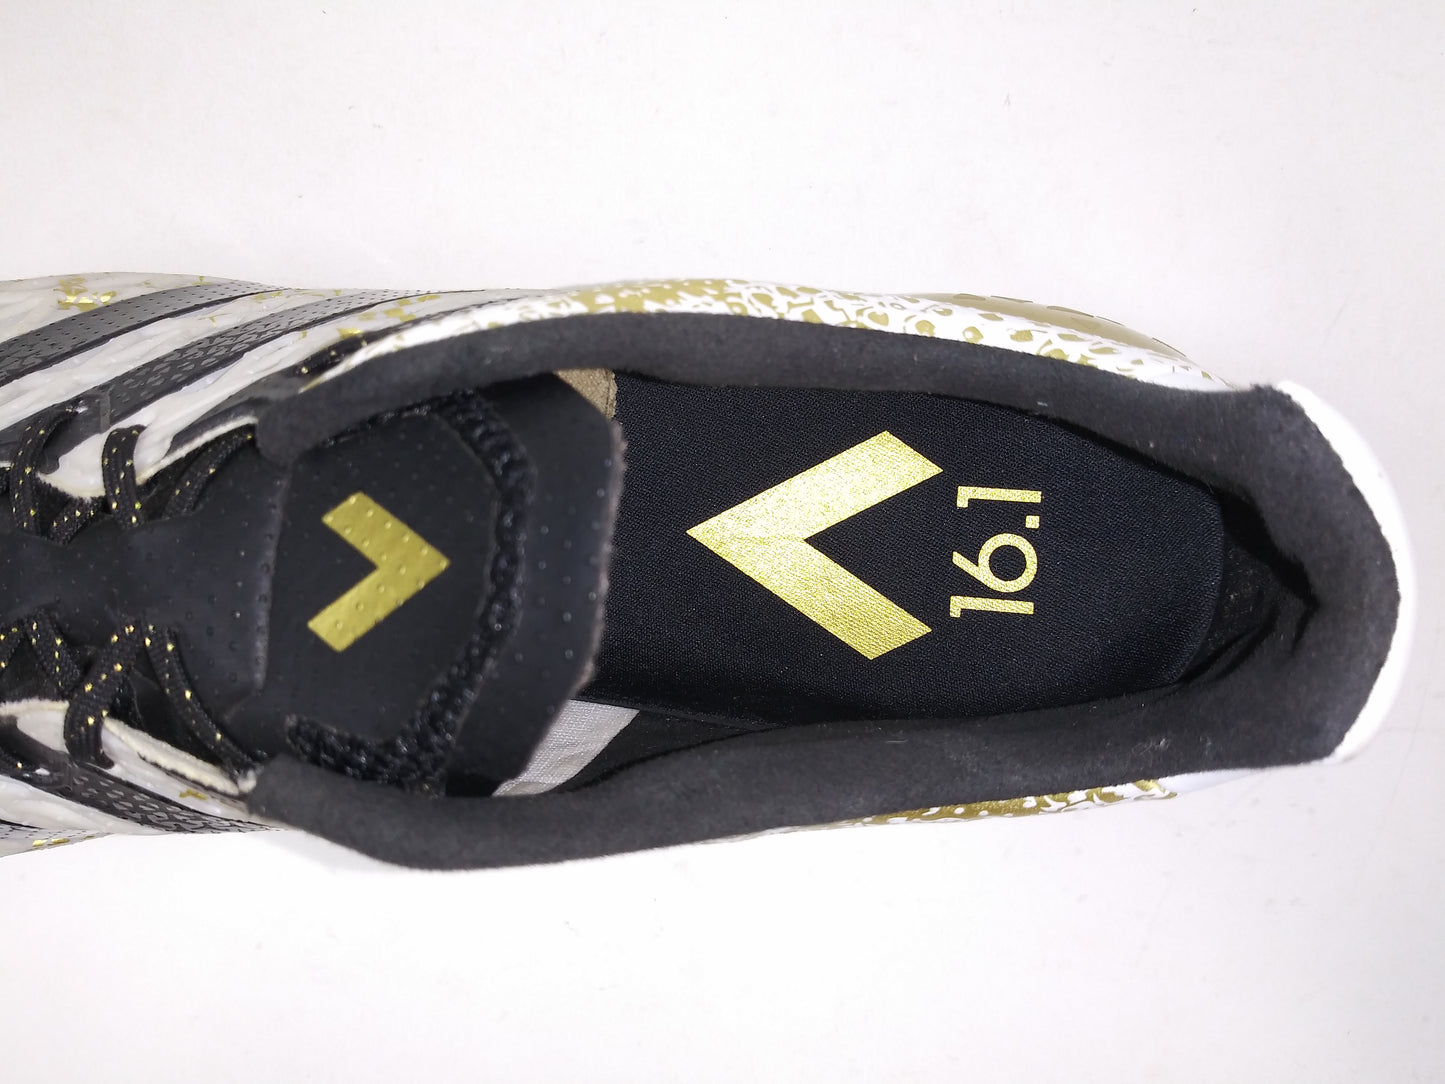 Adidas Ace 16.1 FG/AG White Gold